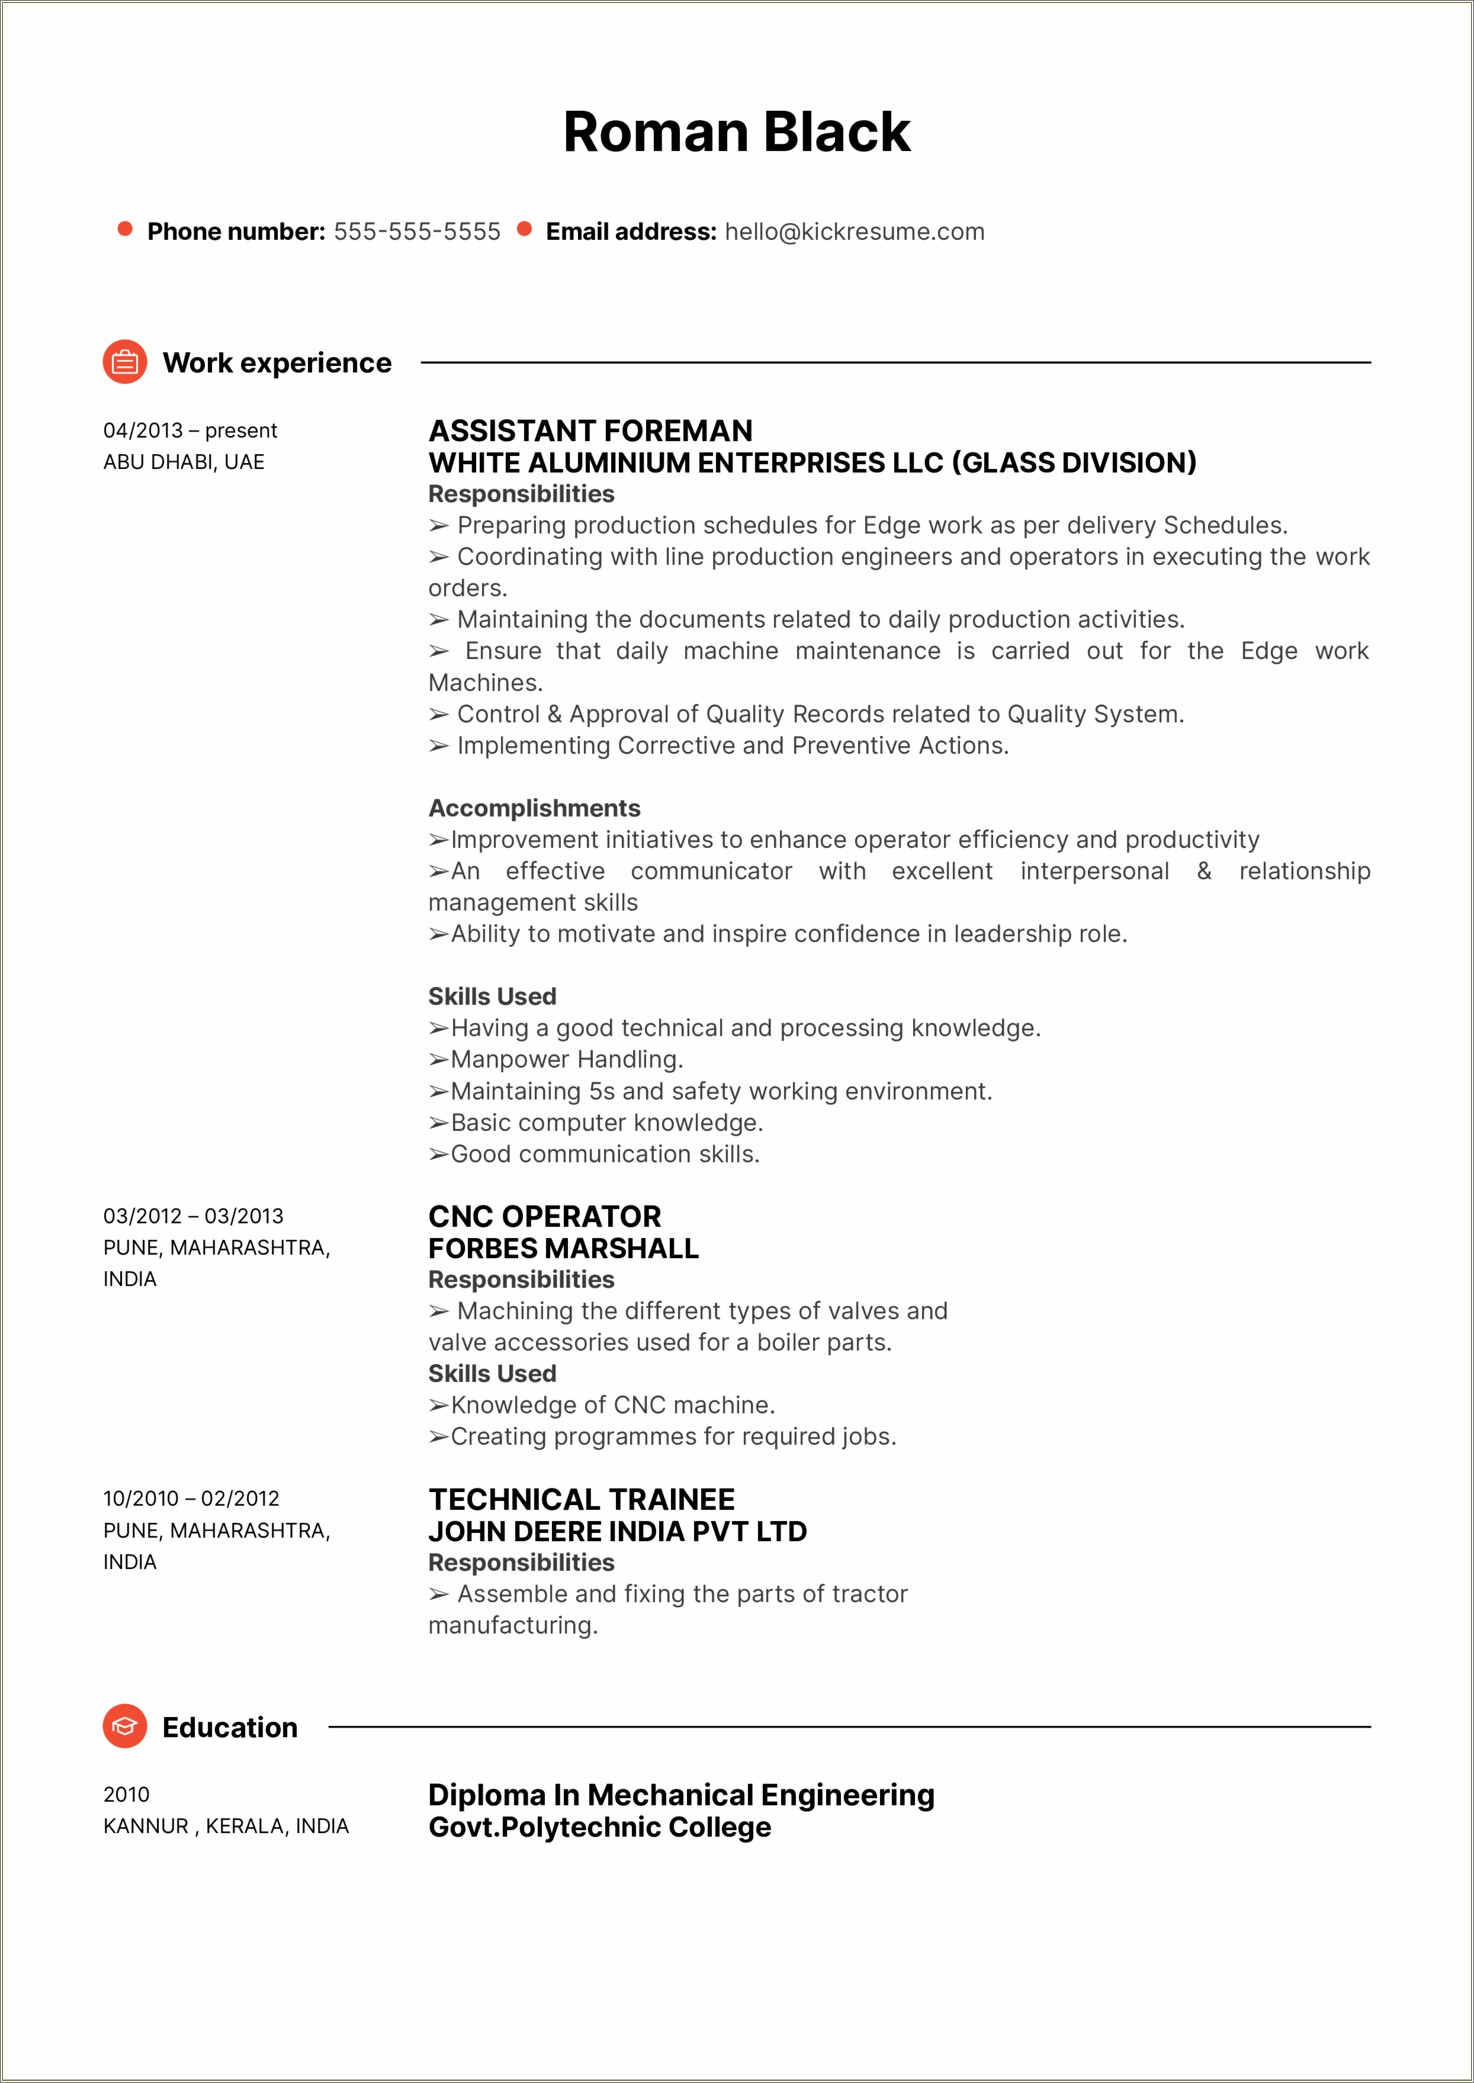 Cnc Machine Operator Job Description Resume